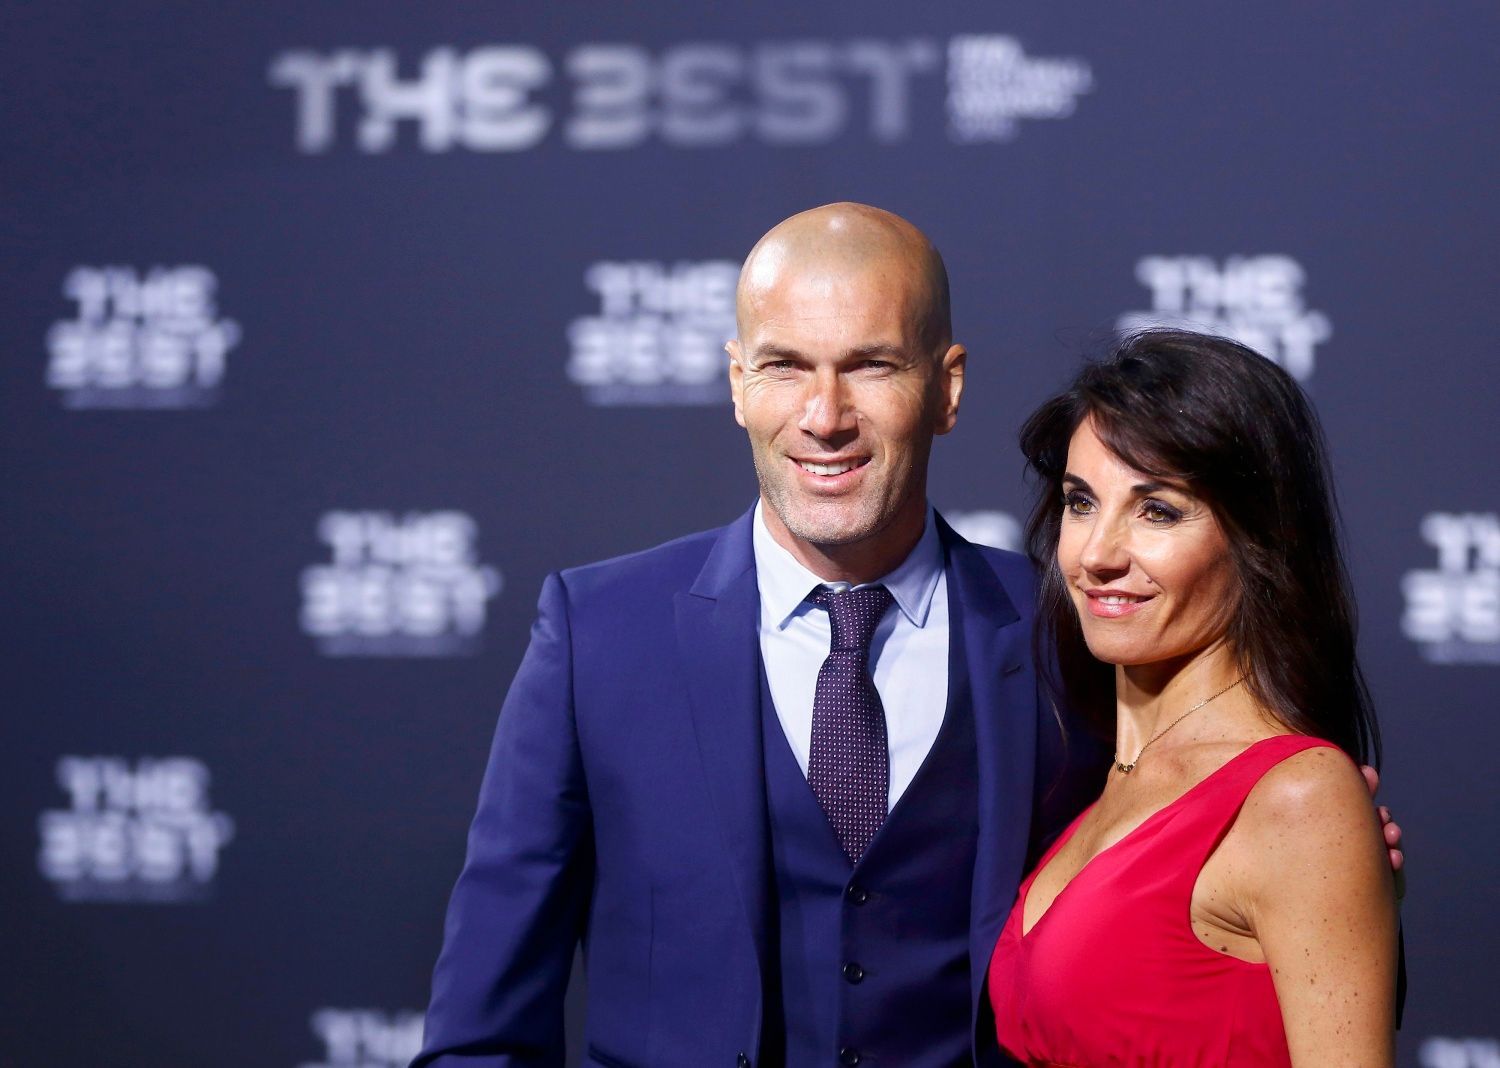 Galavečer FIFA 2017: Zinedine Zidane a jeho manželka Veronique